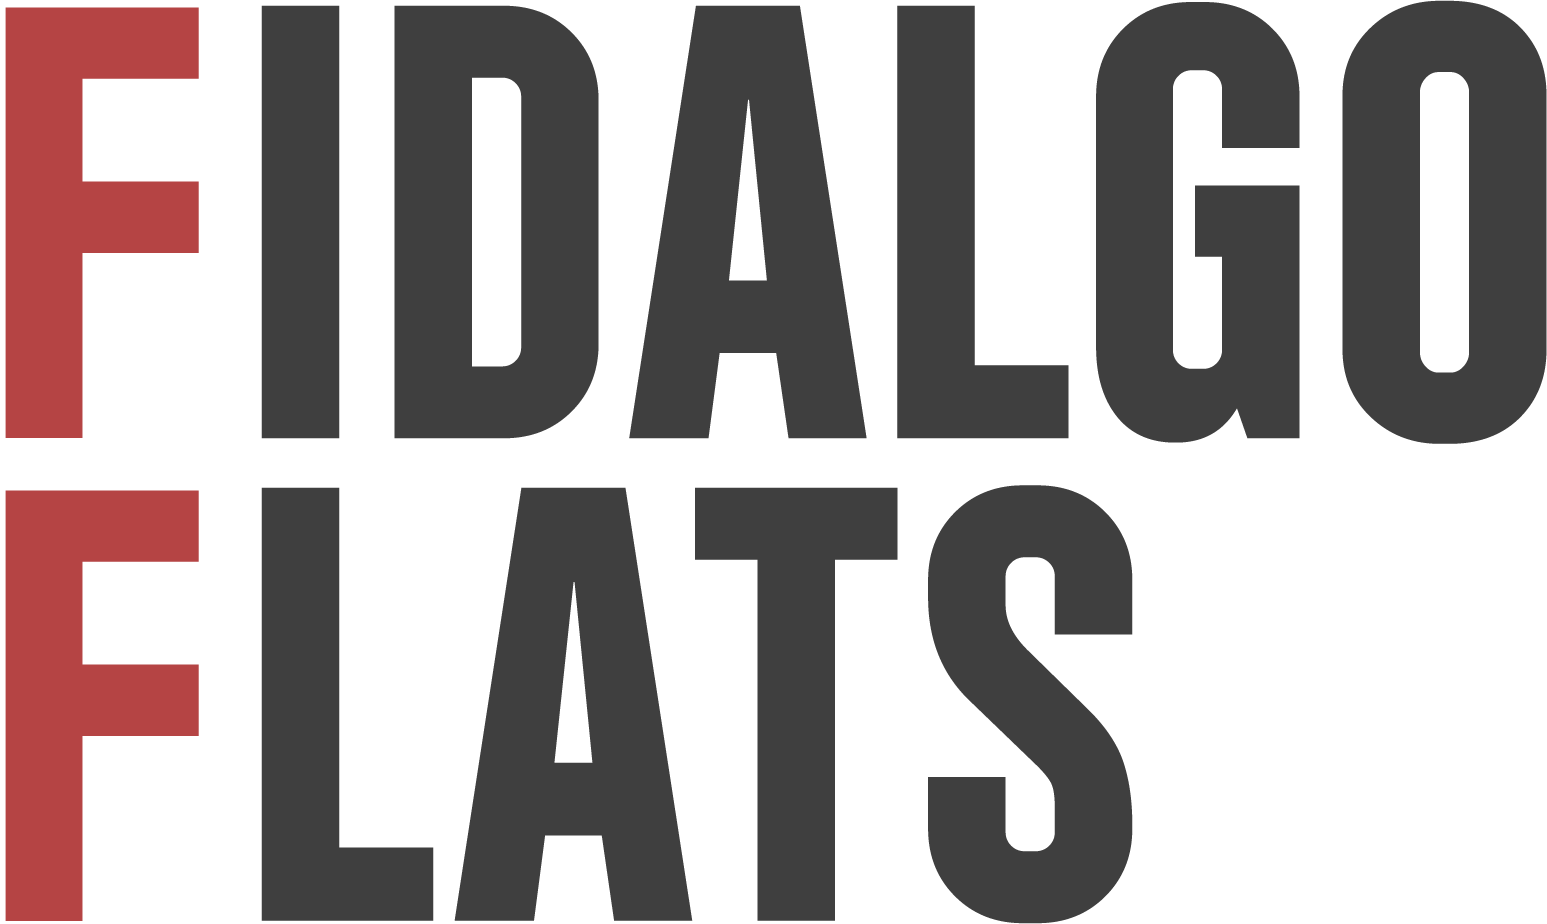 Fidalgo Flats